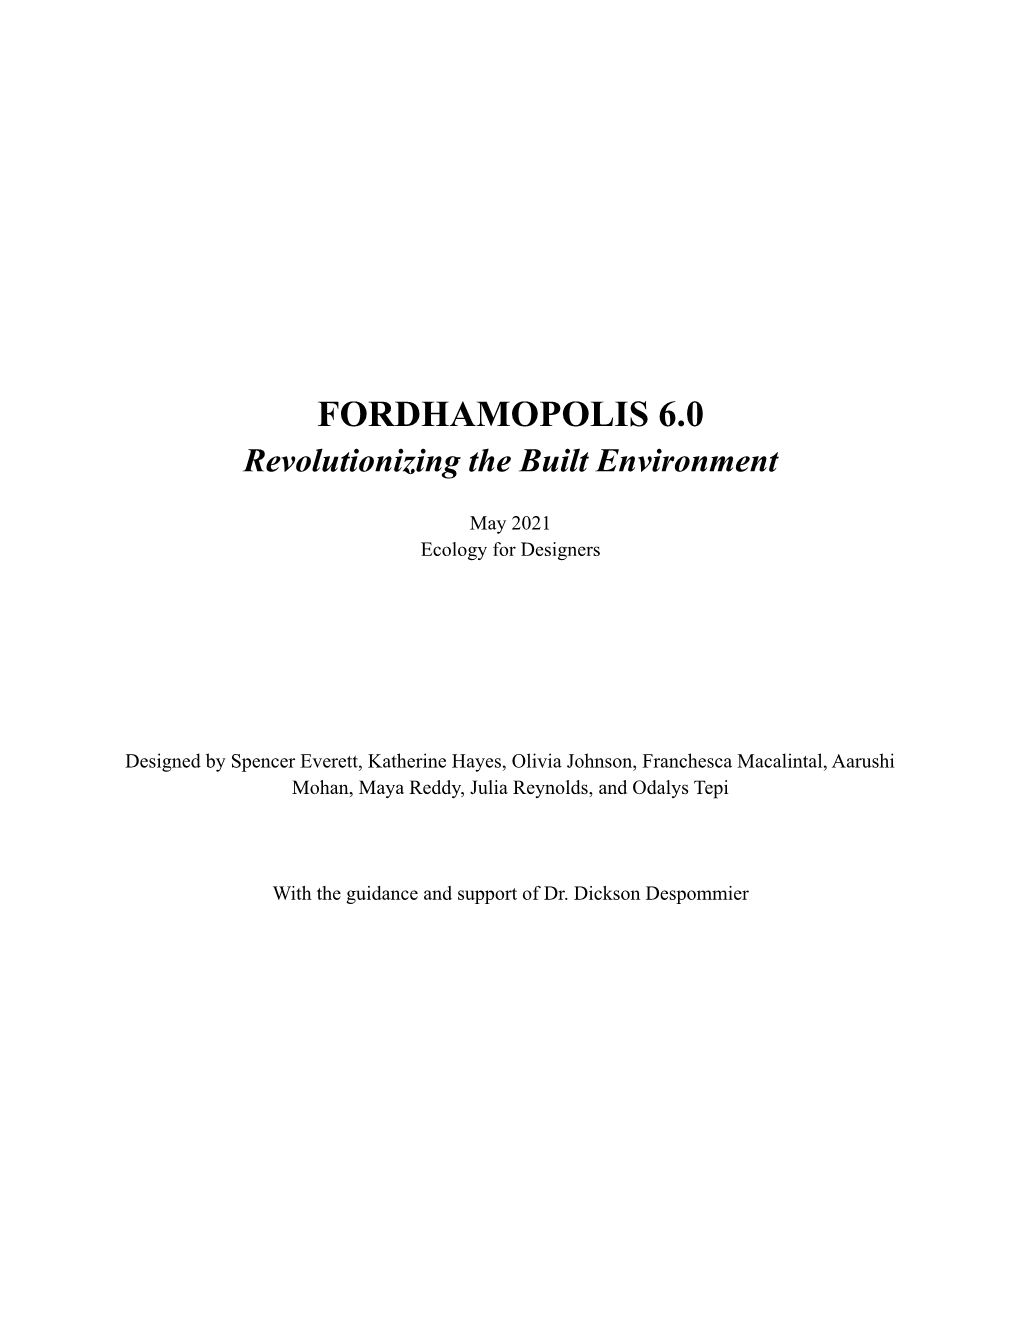 FORDHAMOPOLIS 6.0 Revolutionizing the Built Environment